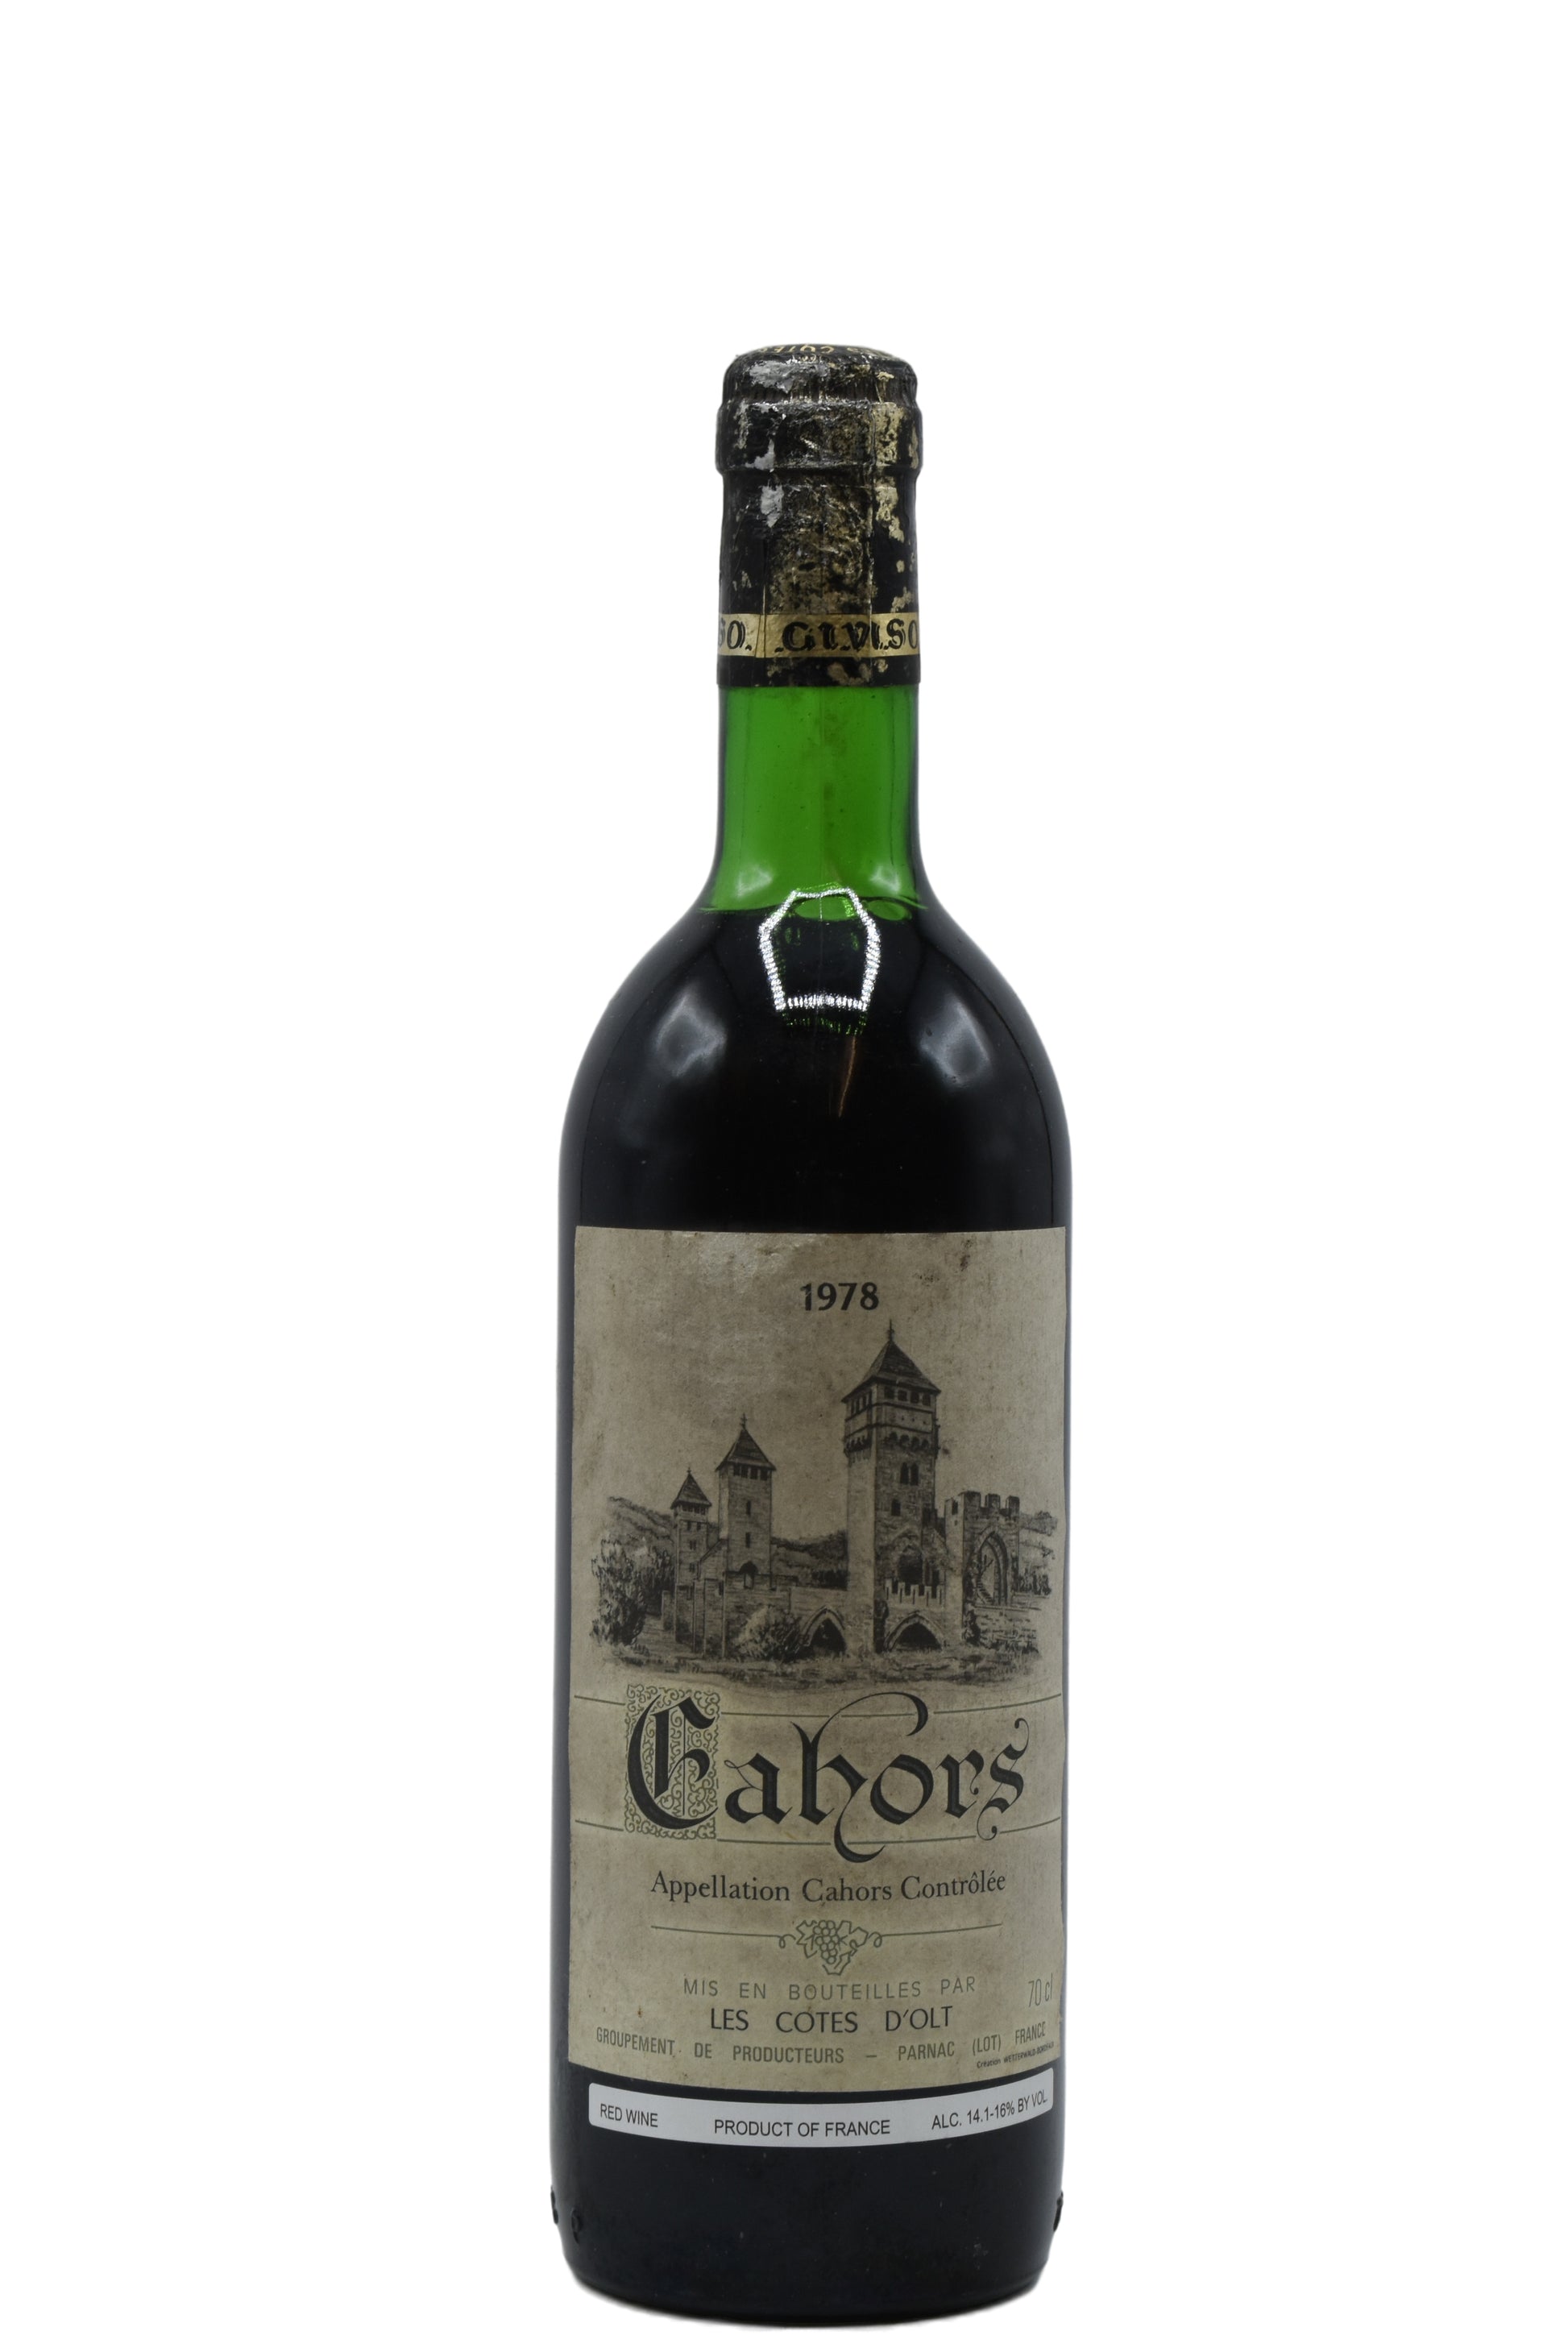 1978 Les Cotes d'Olt Cahors 750ml - Walker Wine Co.